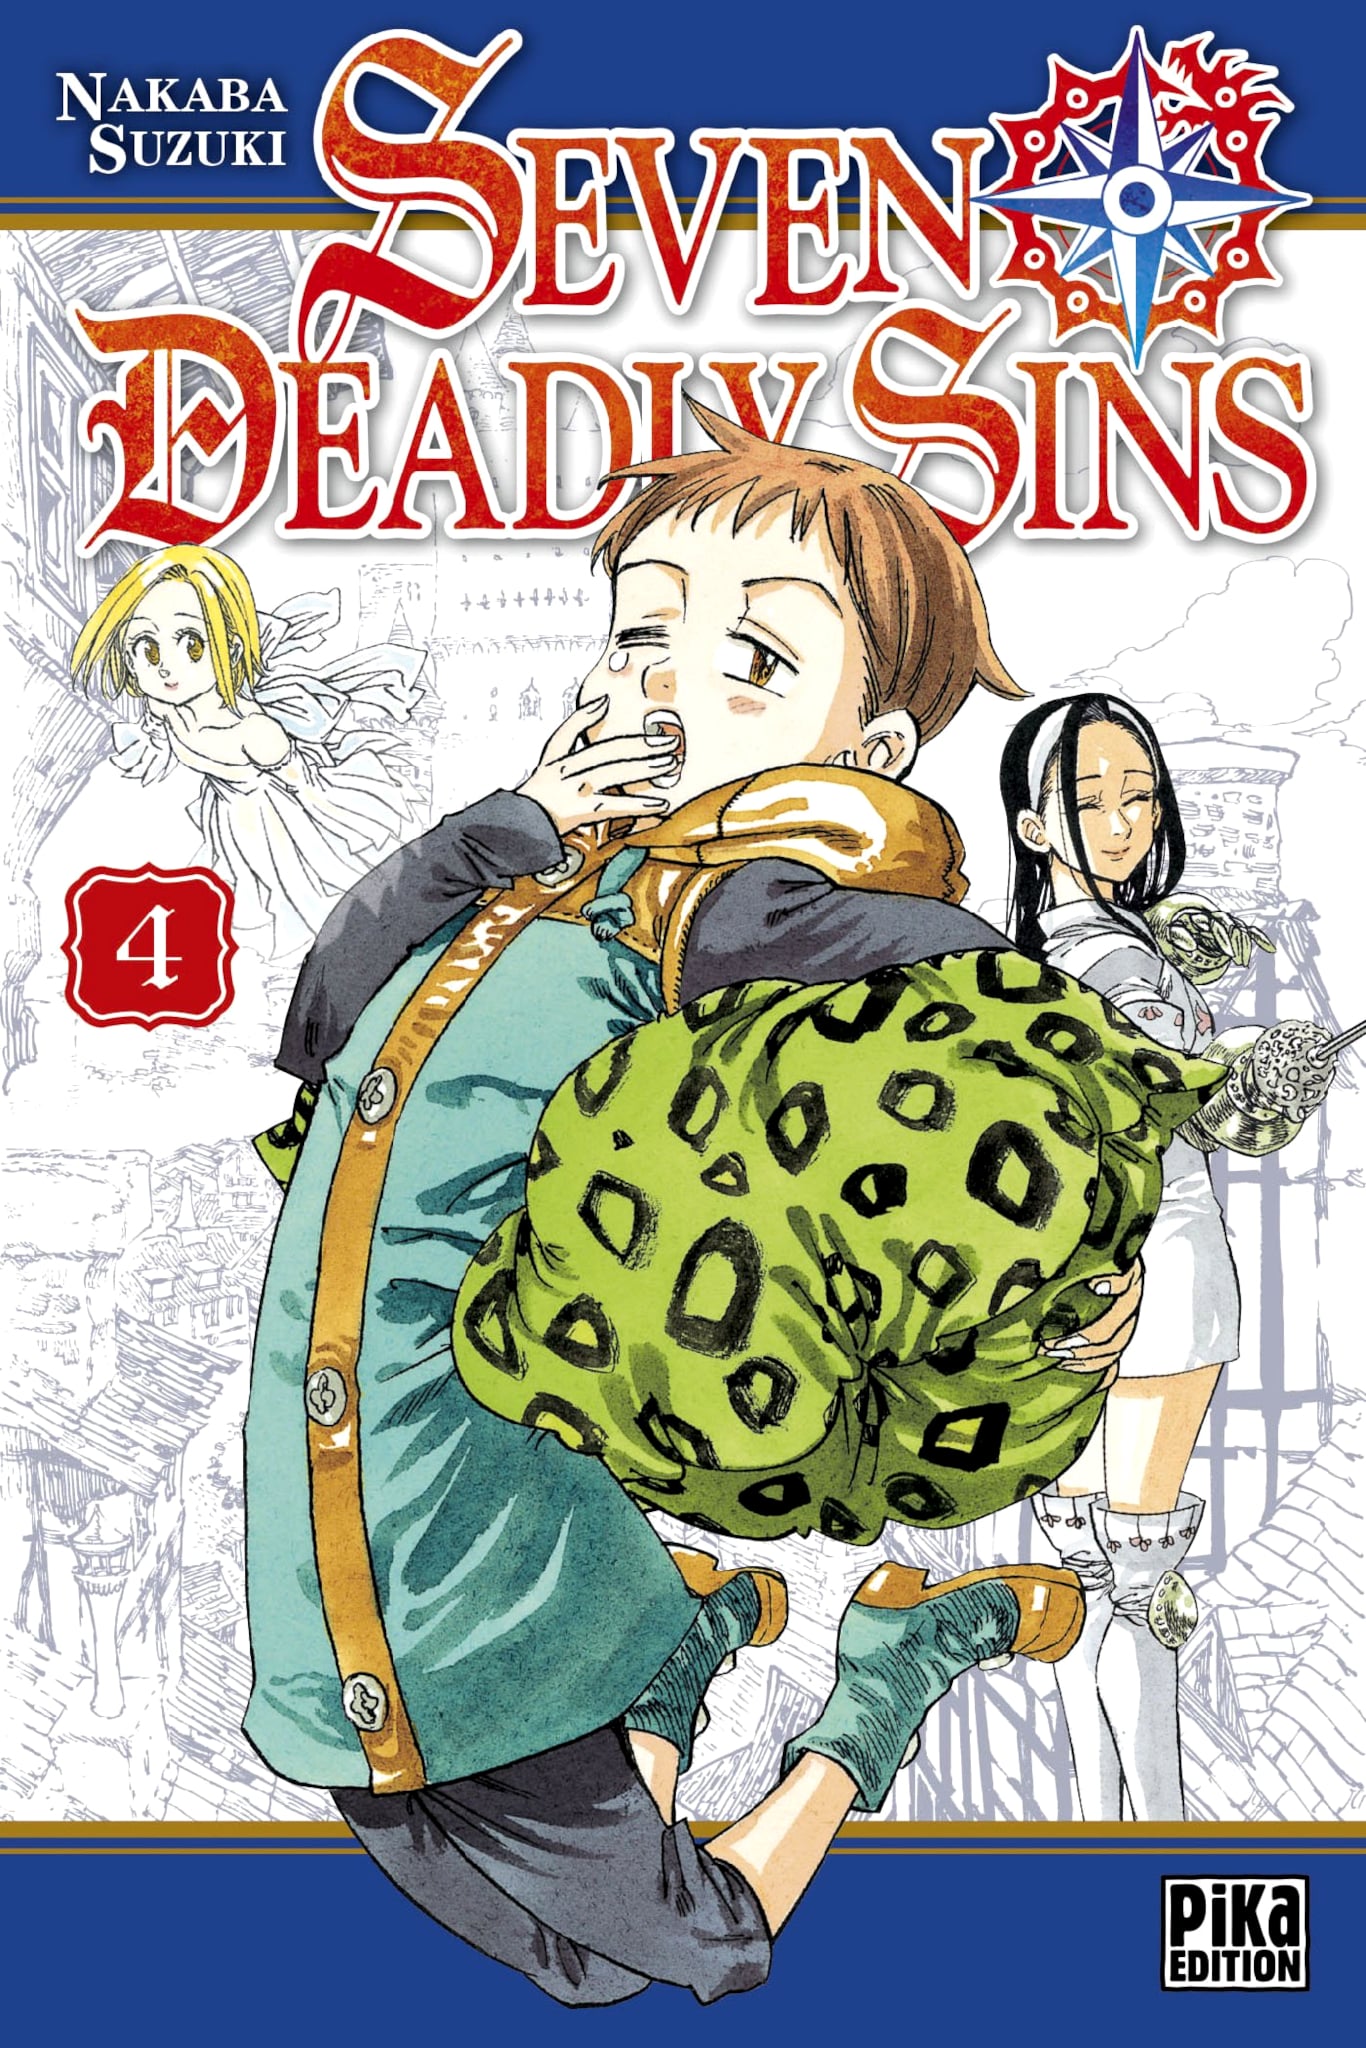 Tome 4 du manga The Seven Deadly Sins